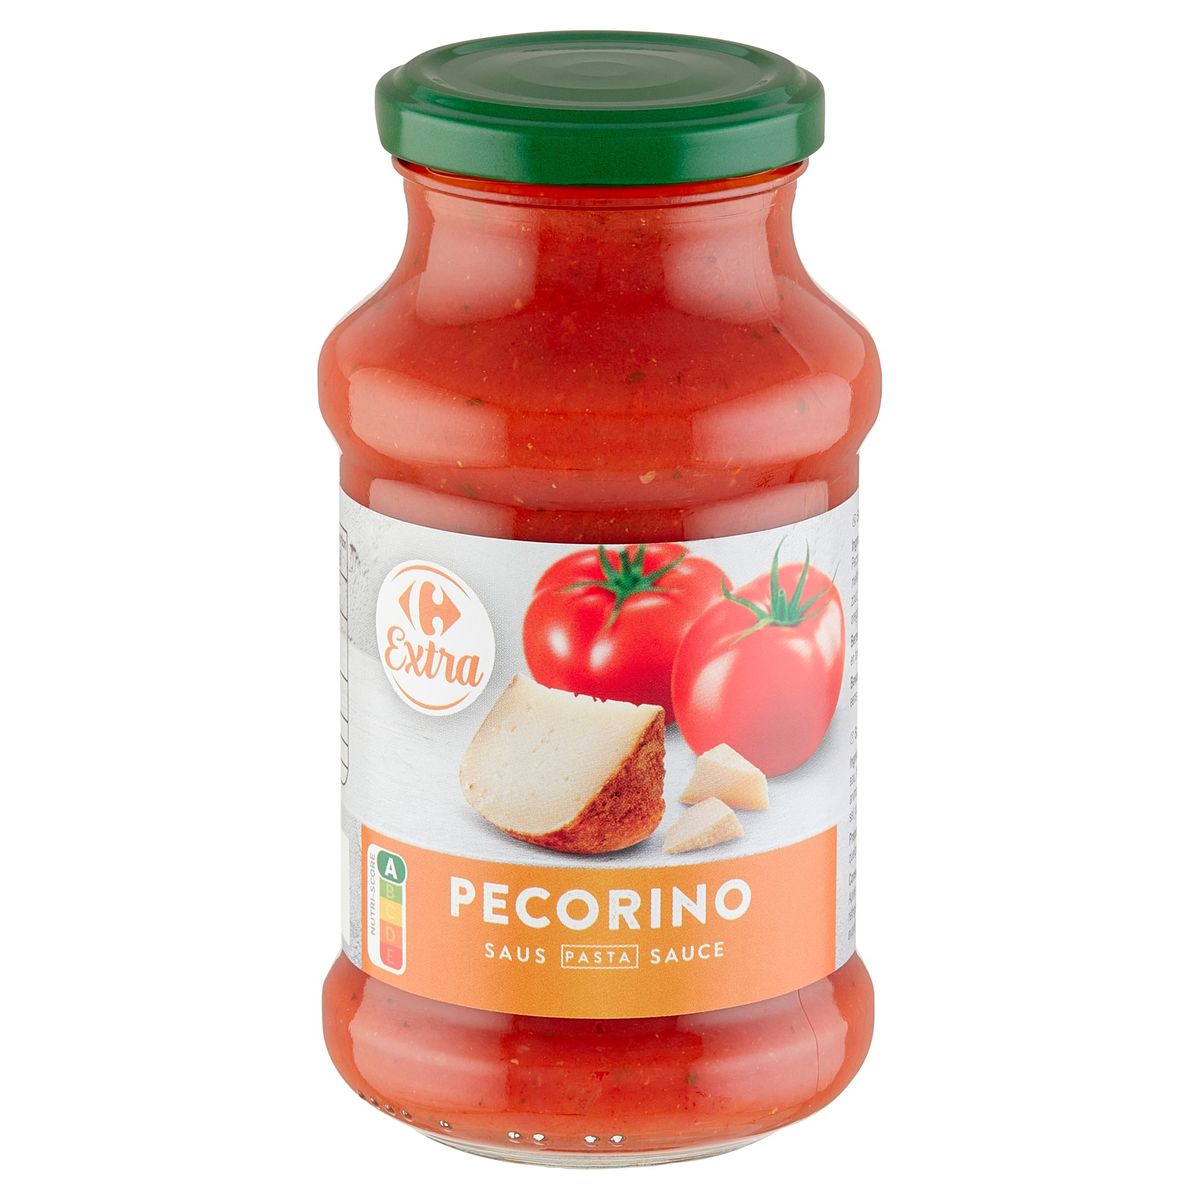 Carrefour Extra Pecorino Pasta Sauce 400 g